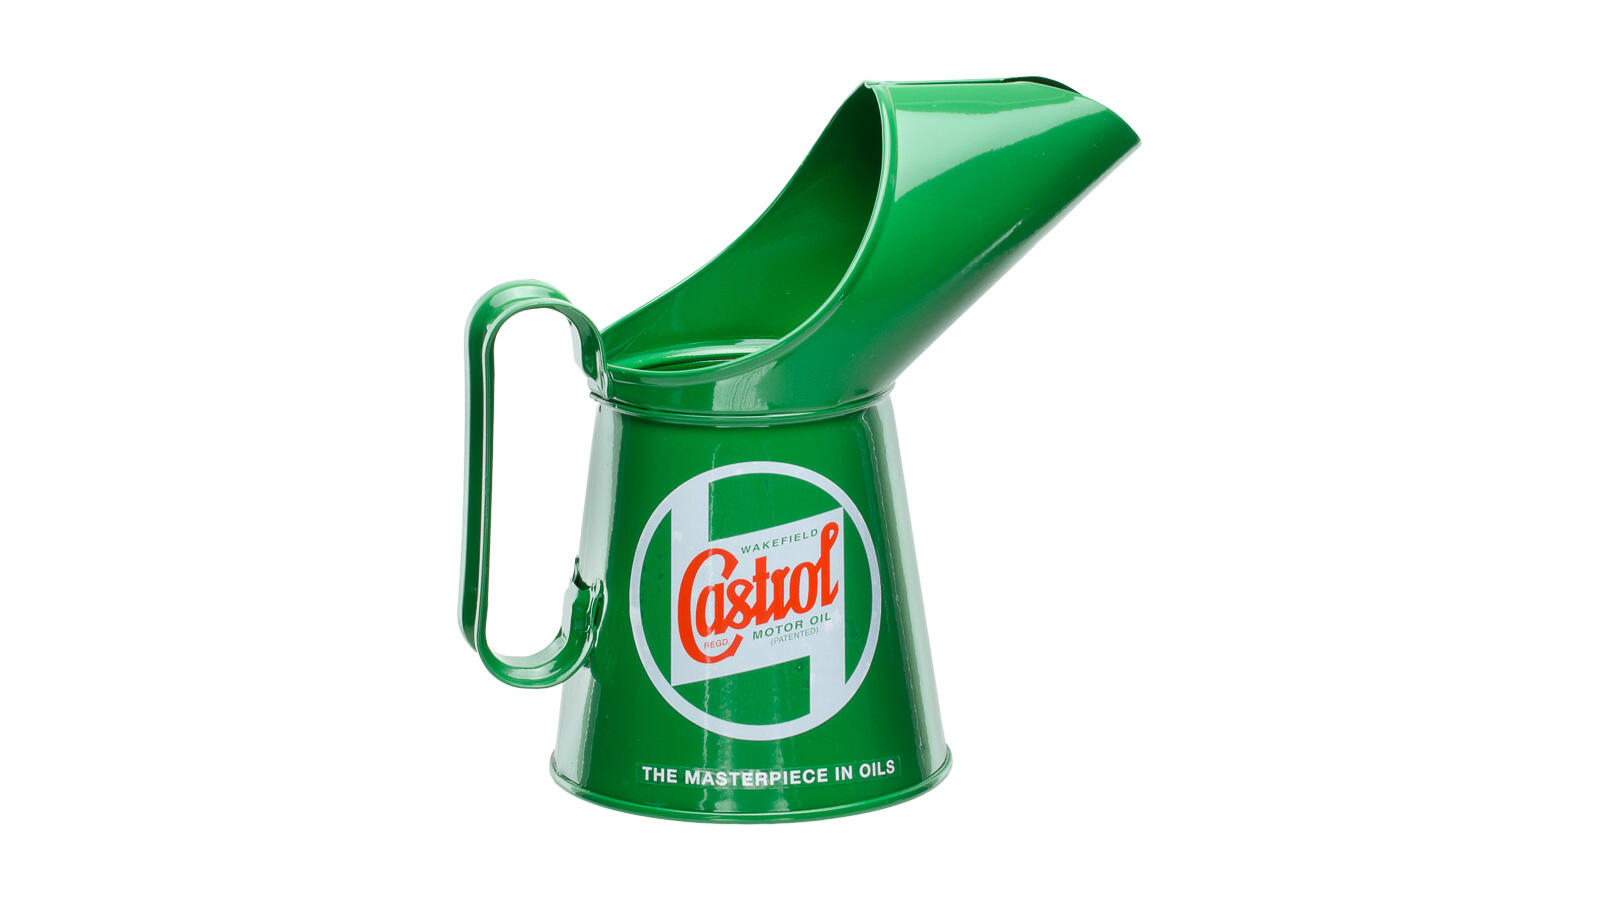 Castrol Nostalgie-Ölkanne 237ml (1/2 pint), 15,20 €